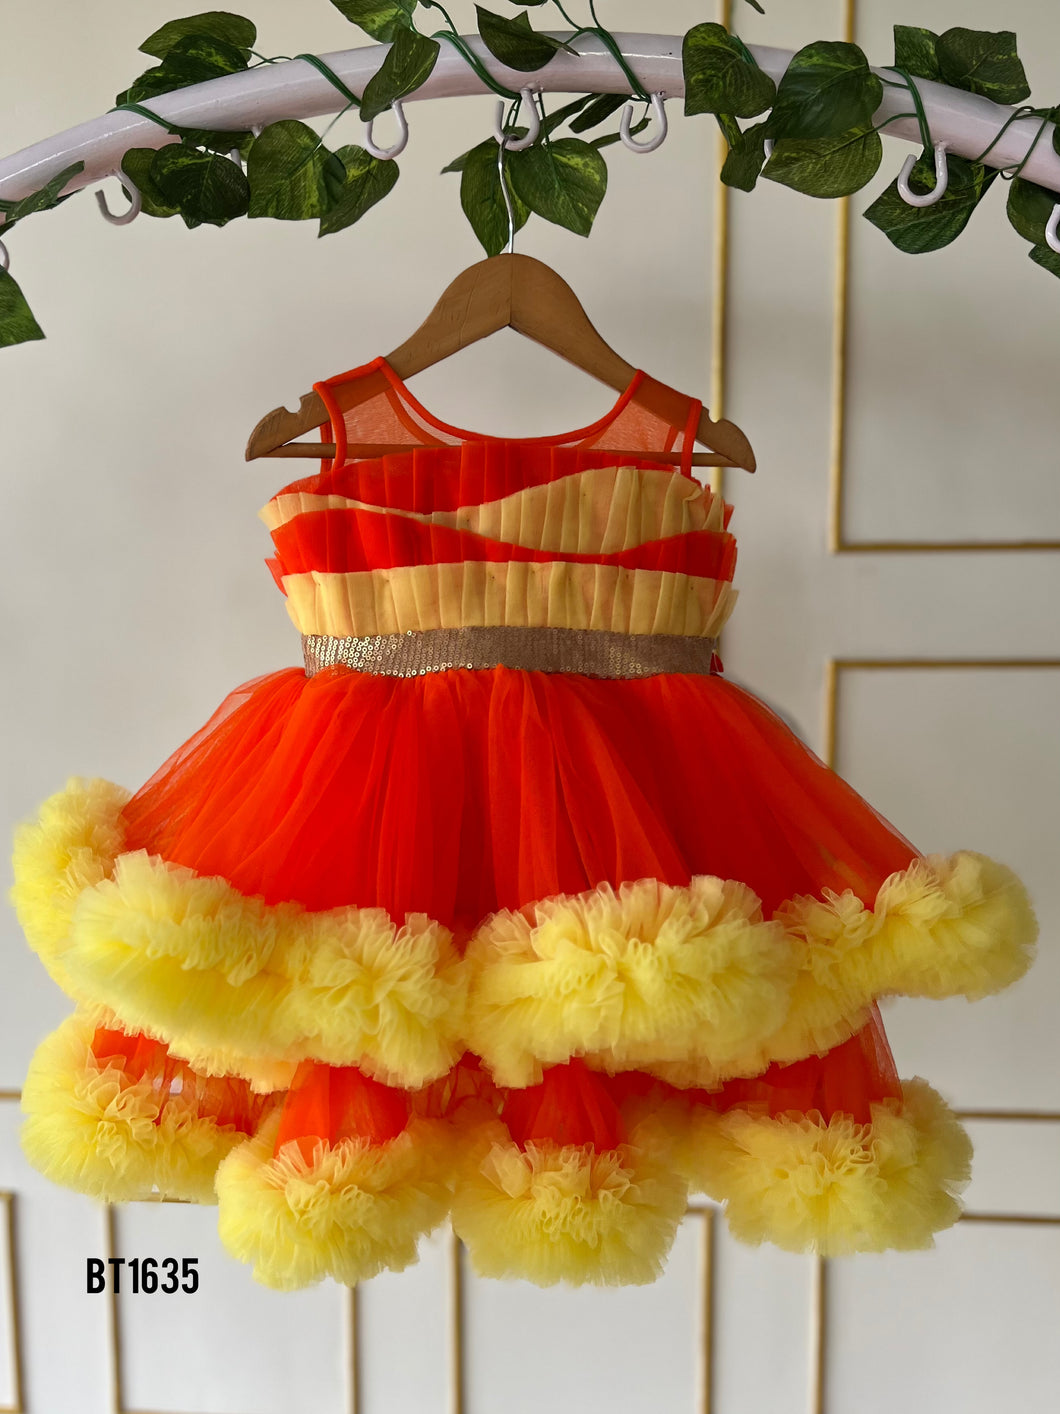 BT1635 Sunny Day Pom-Pom Fiesta Dress for Playful Moments